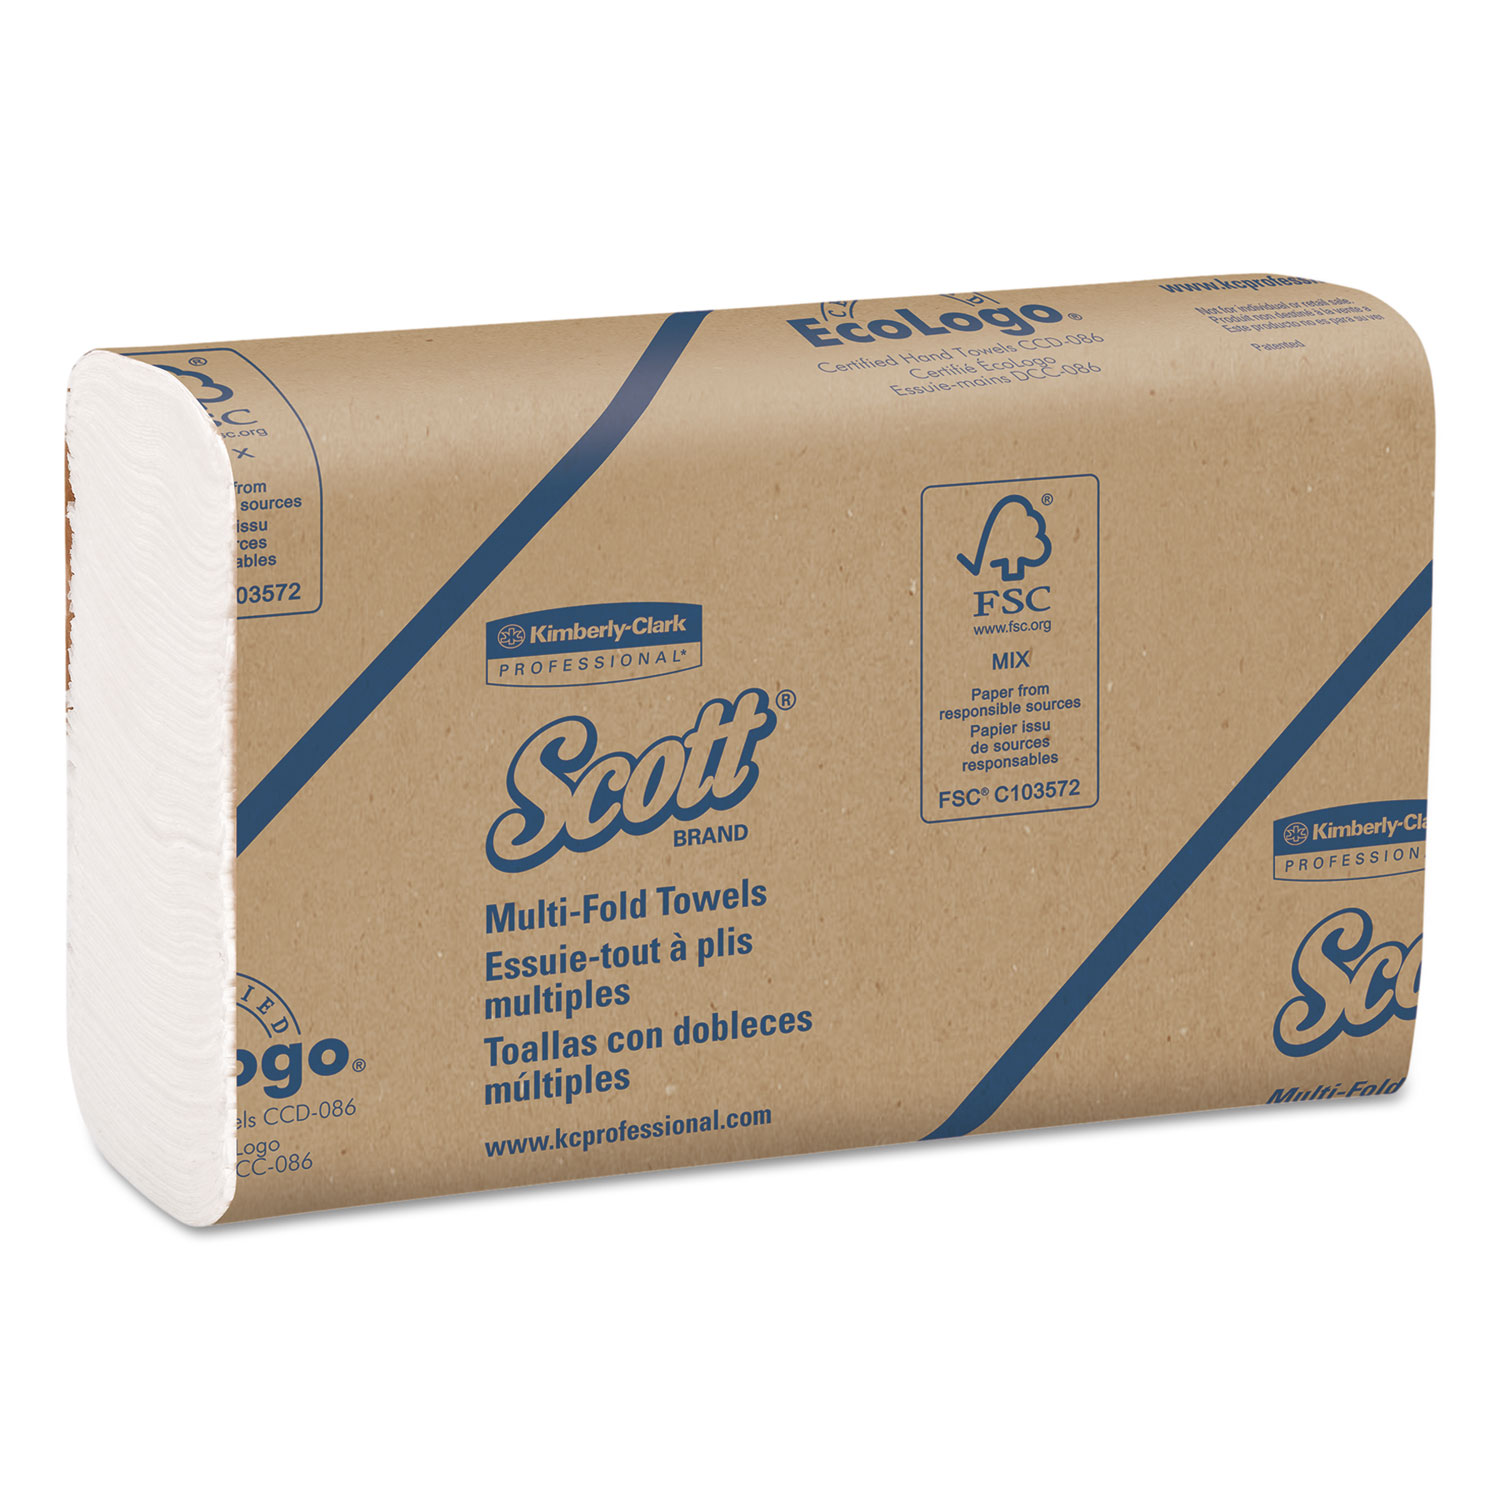  Scott 03650 Multi-Fold Towels, Absorbency Pockets, 9 2/5 x 9 1/5, White, 250 Sheets/Pack (KCC03650) 